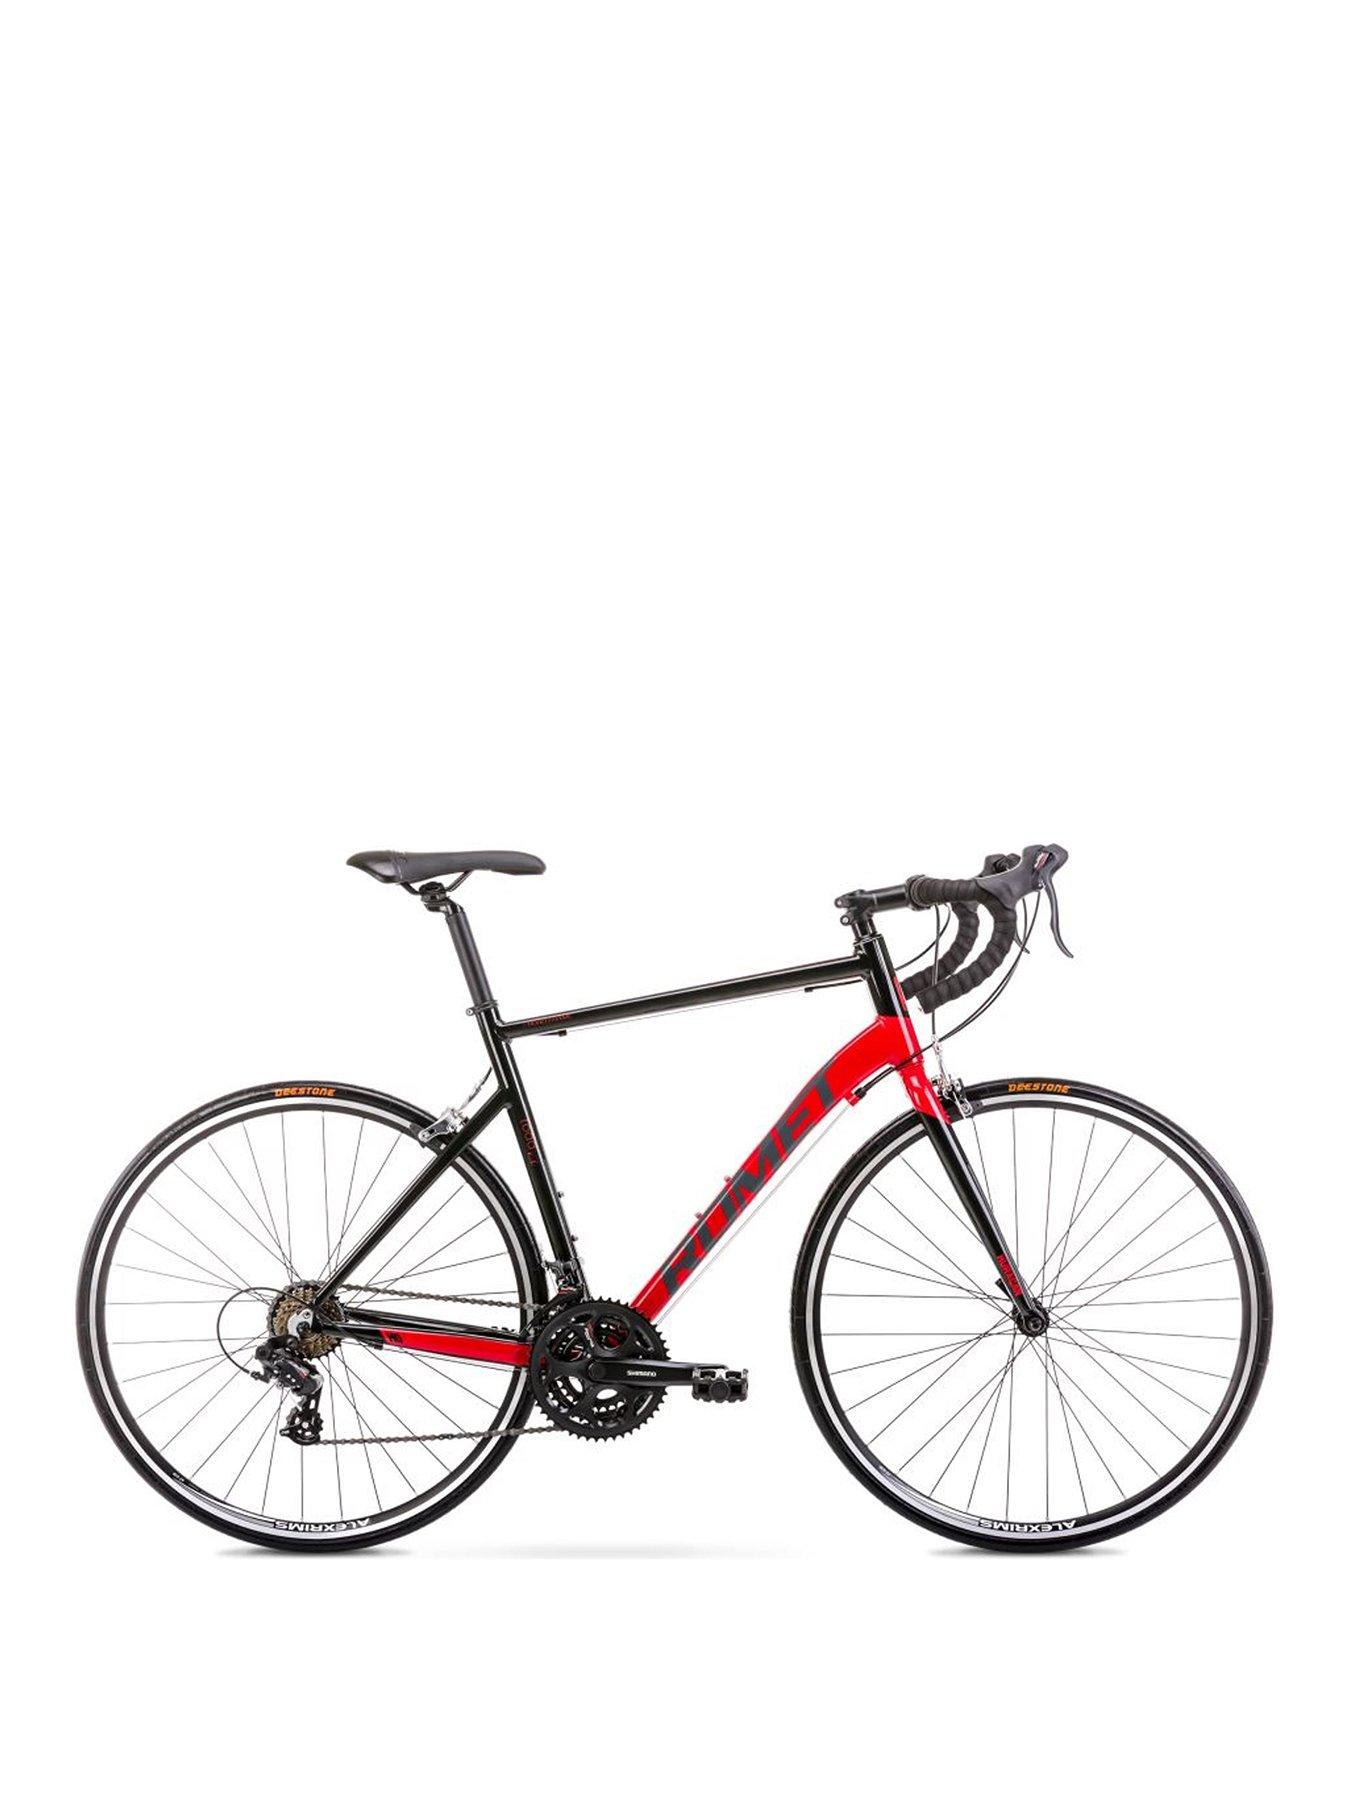 53cm bike frame